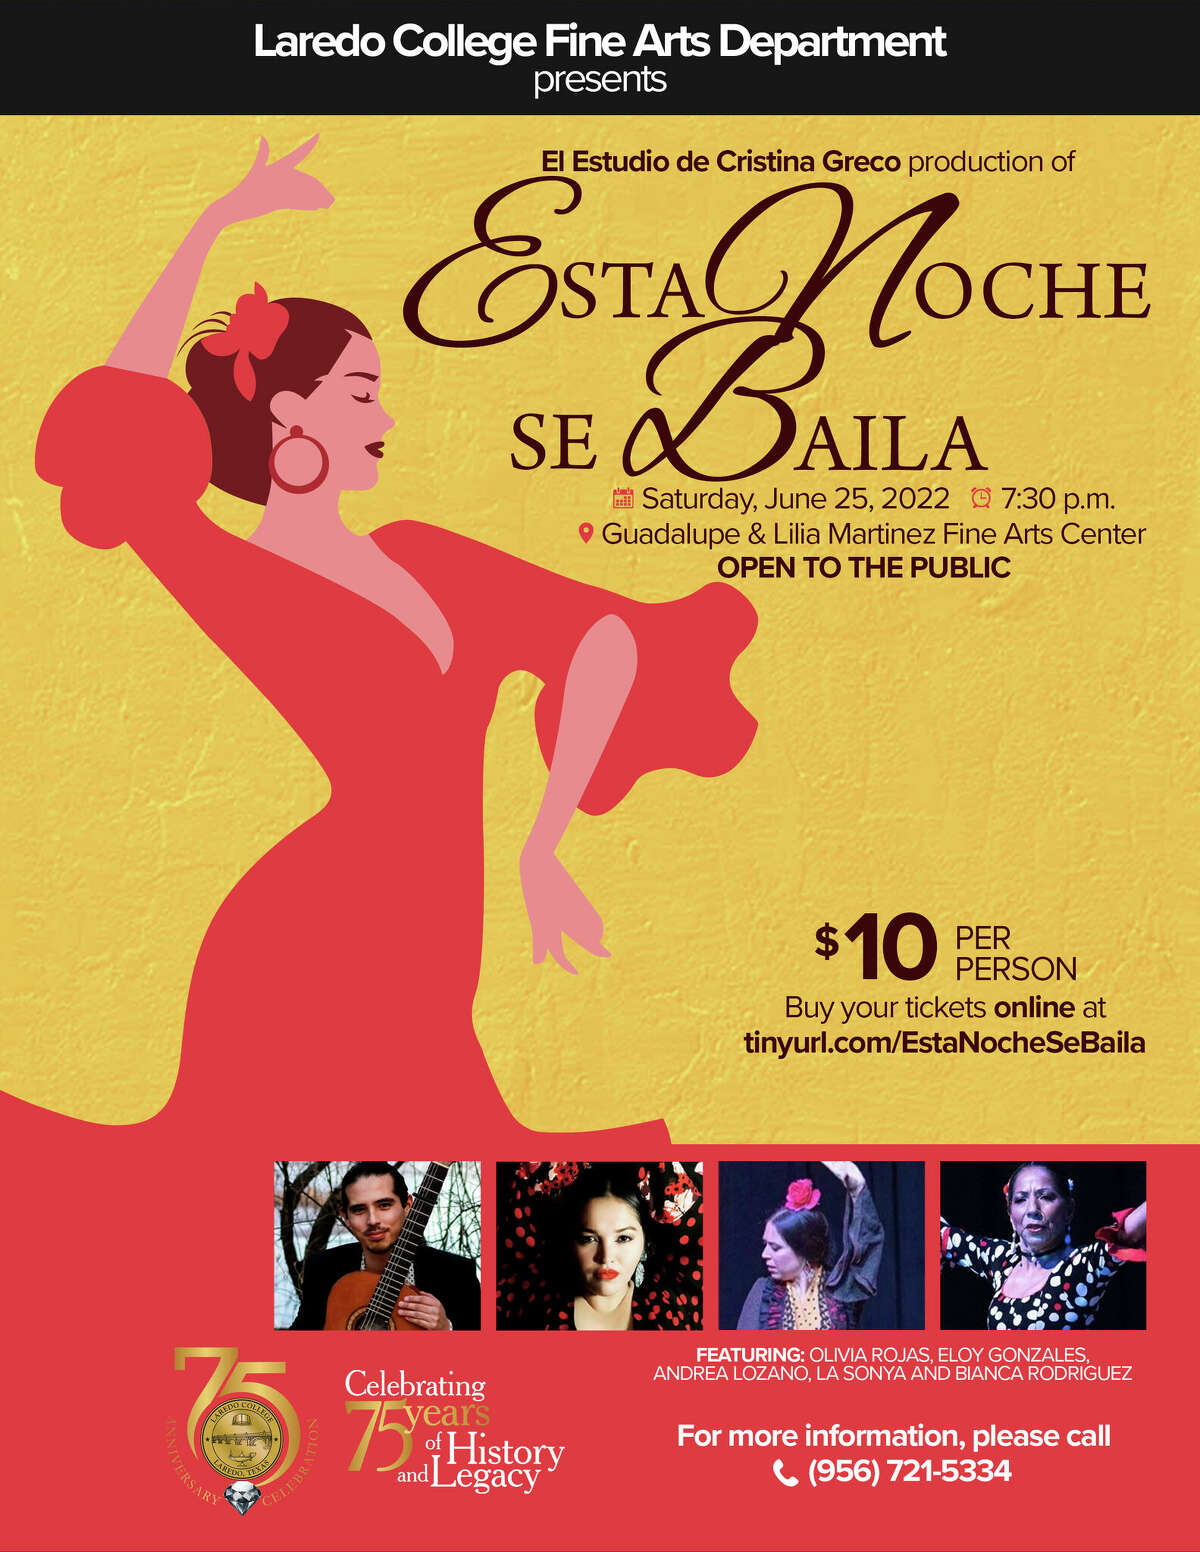 Laredo College Fine Arts Department will feature flamenco performances on Saturday, June 25, at 7:30 p.m. at the Guadalupe and Lilia Martinez Fine Arts Center.